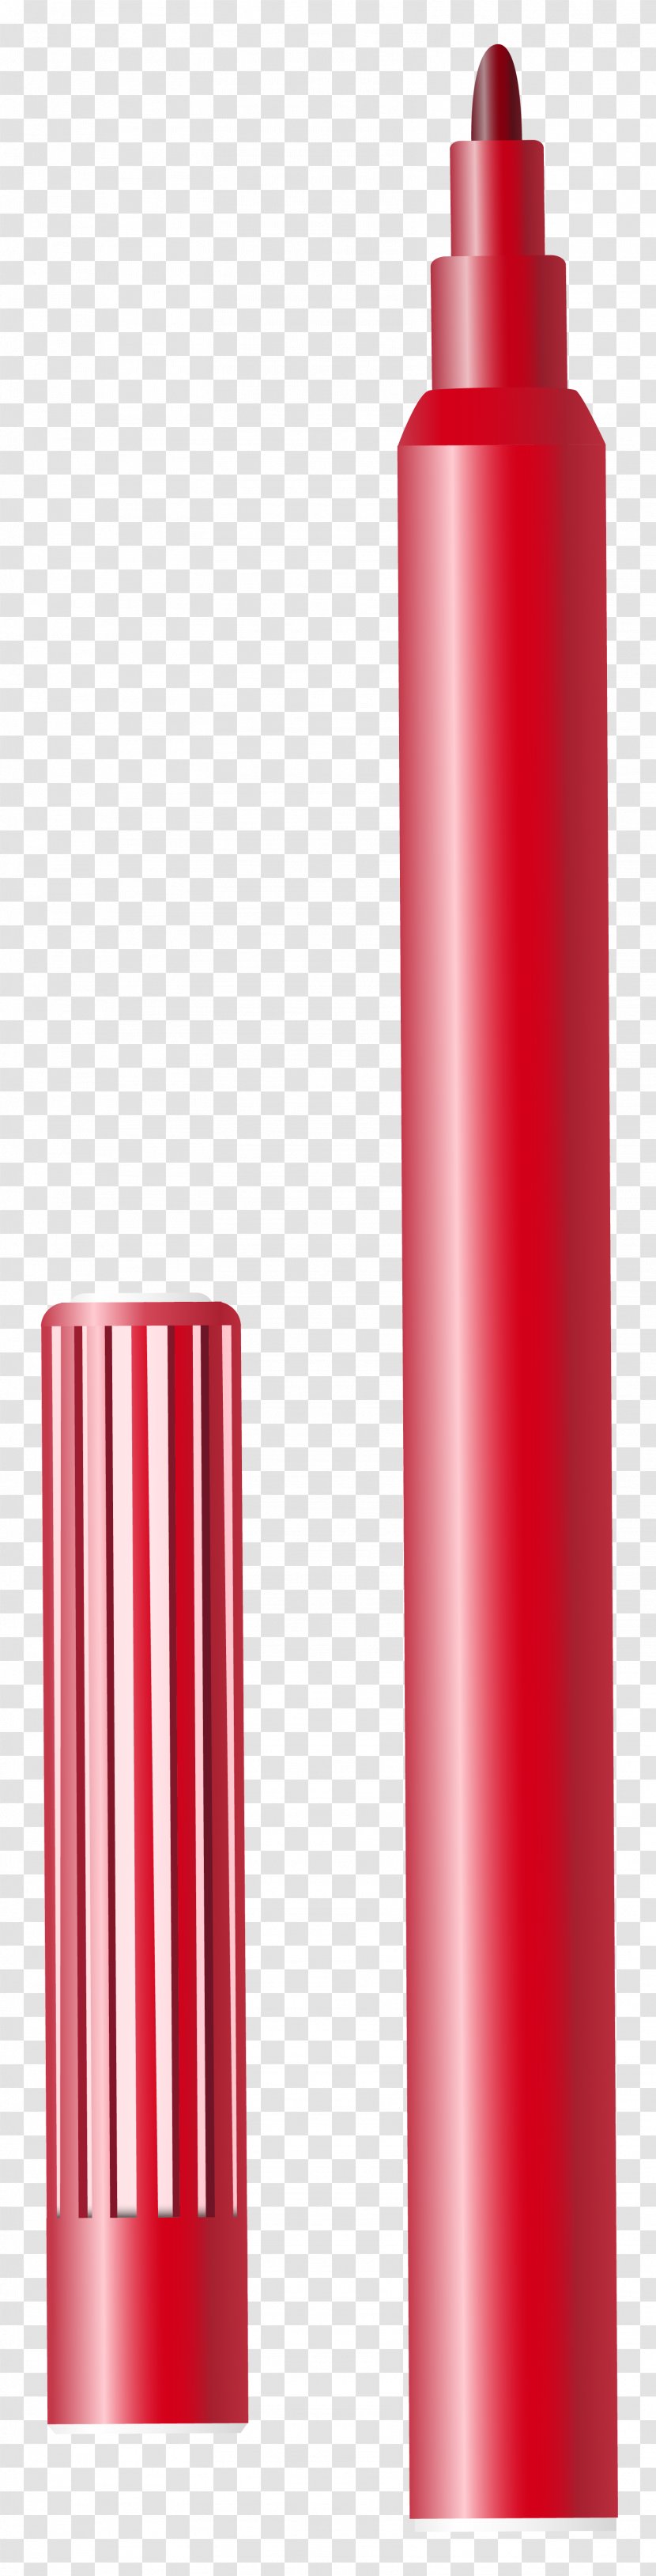 Marker Pen Pencil Clip Art - Bottle - Red Felt Tip Clipart Image Transparent PNG